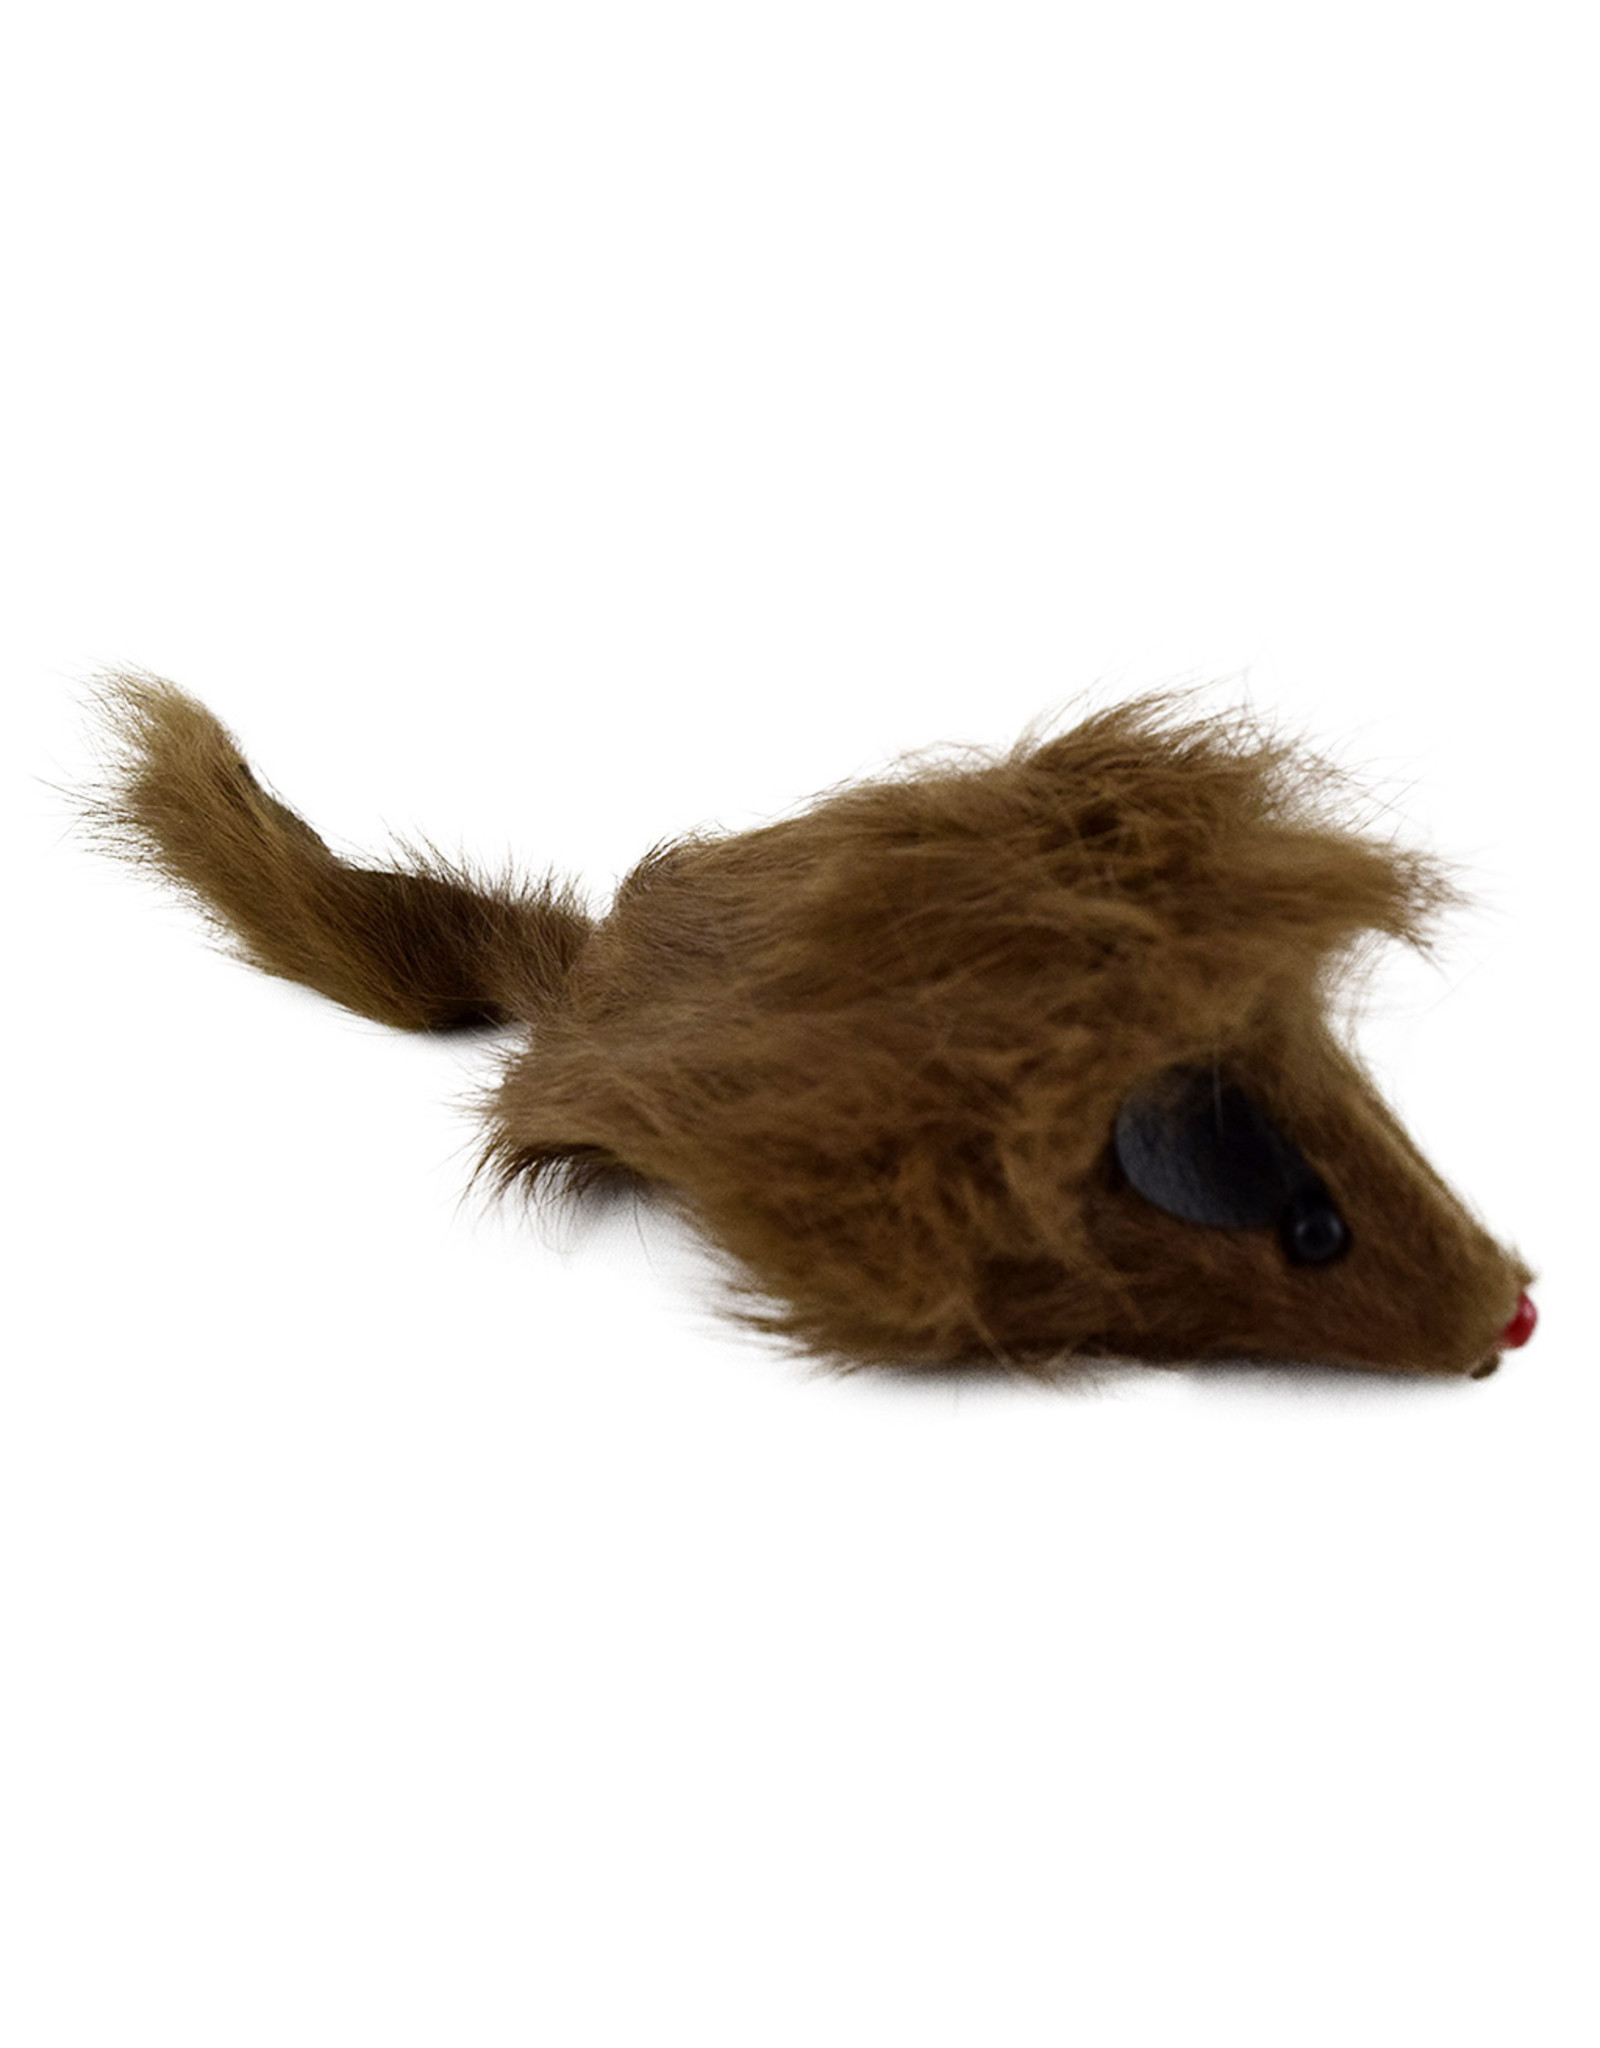 Amazing Pet Products Fur Mouse Long Hair 3" Squeak SINGLE